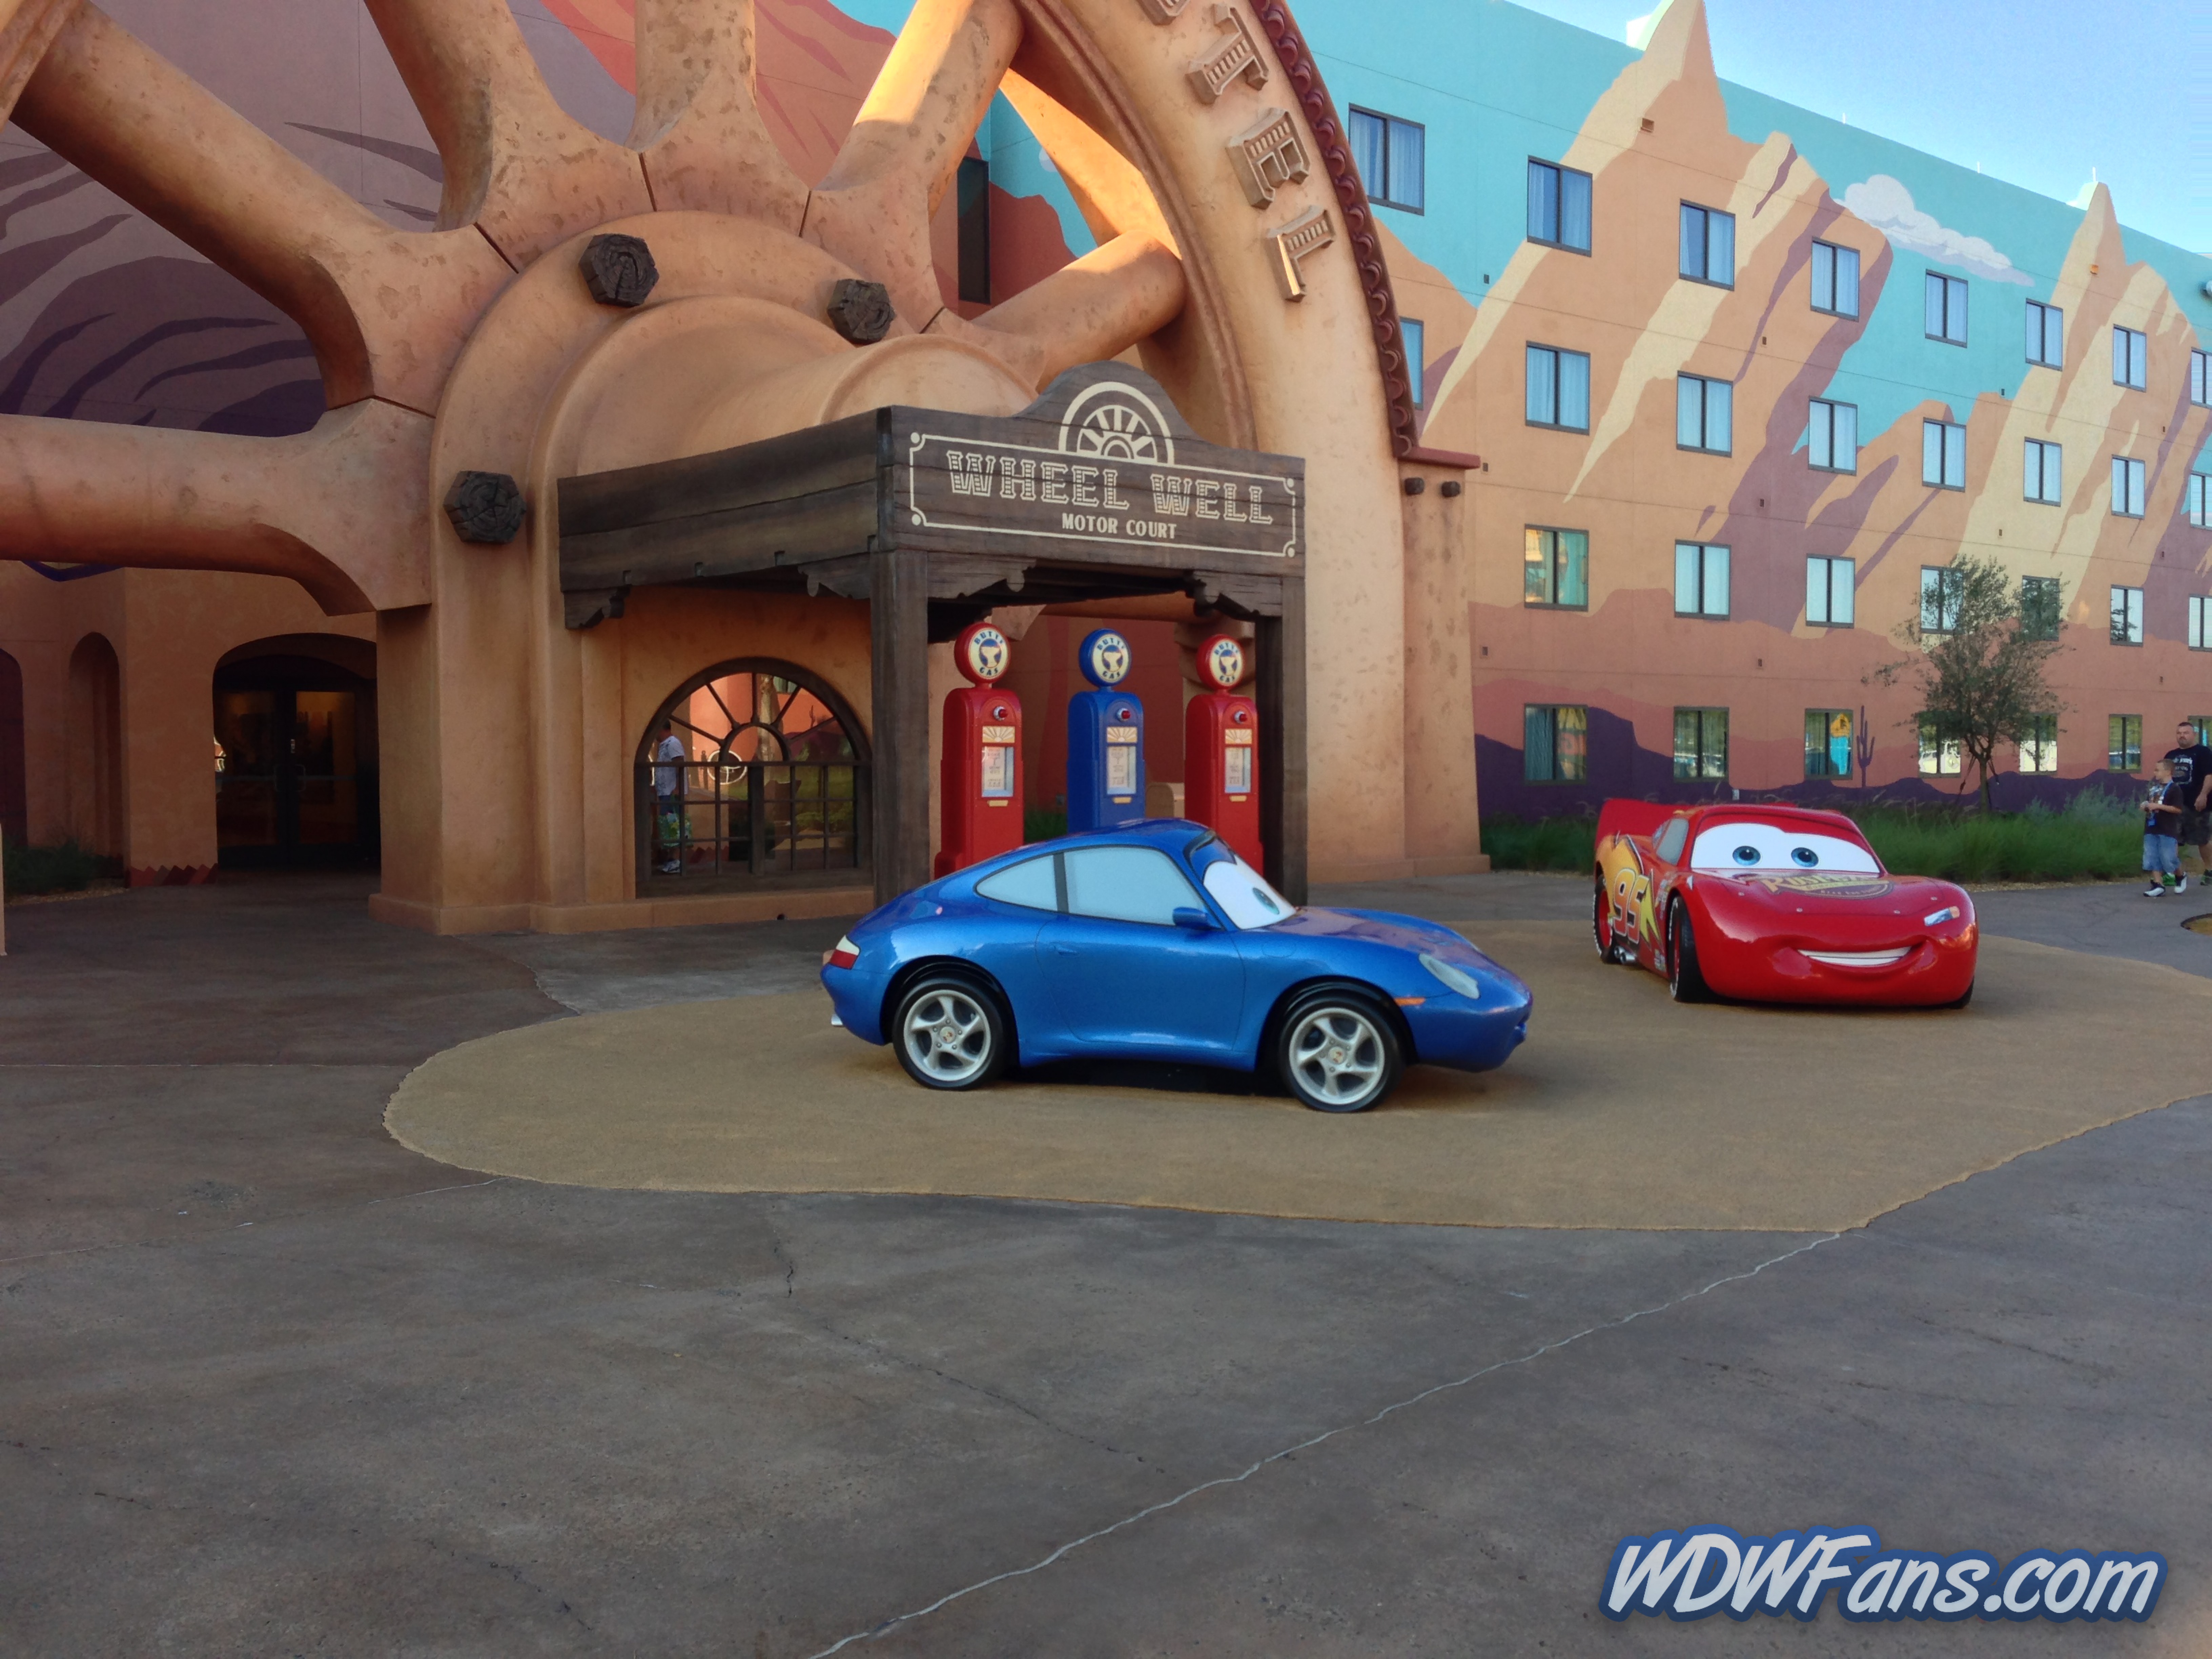 Cars - Art of Animation Resort